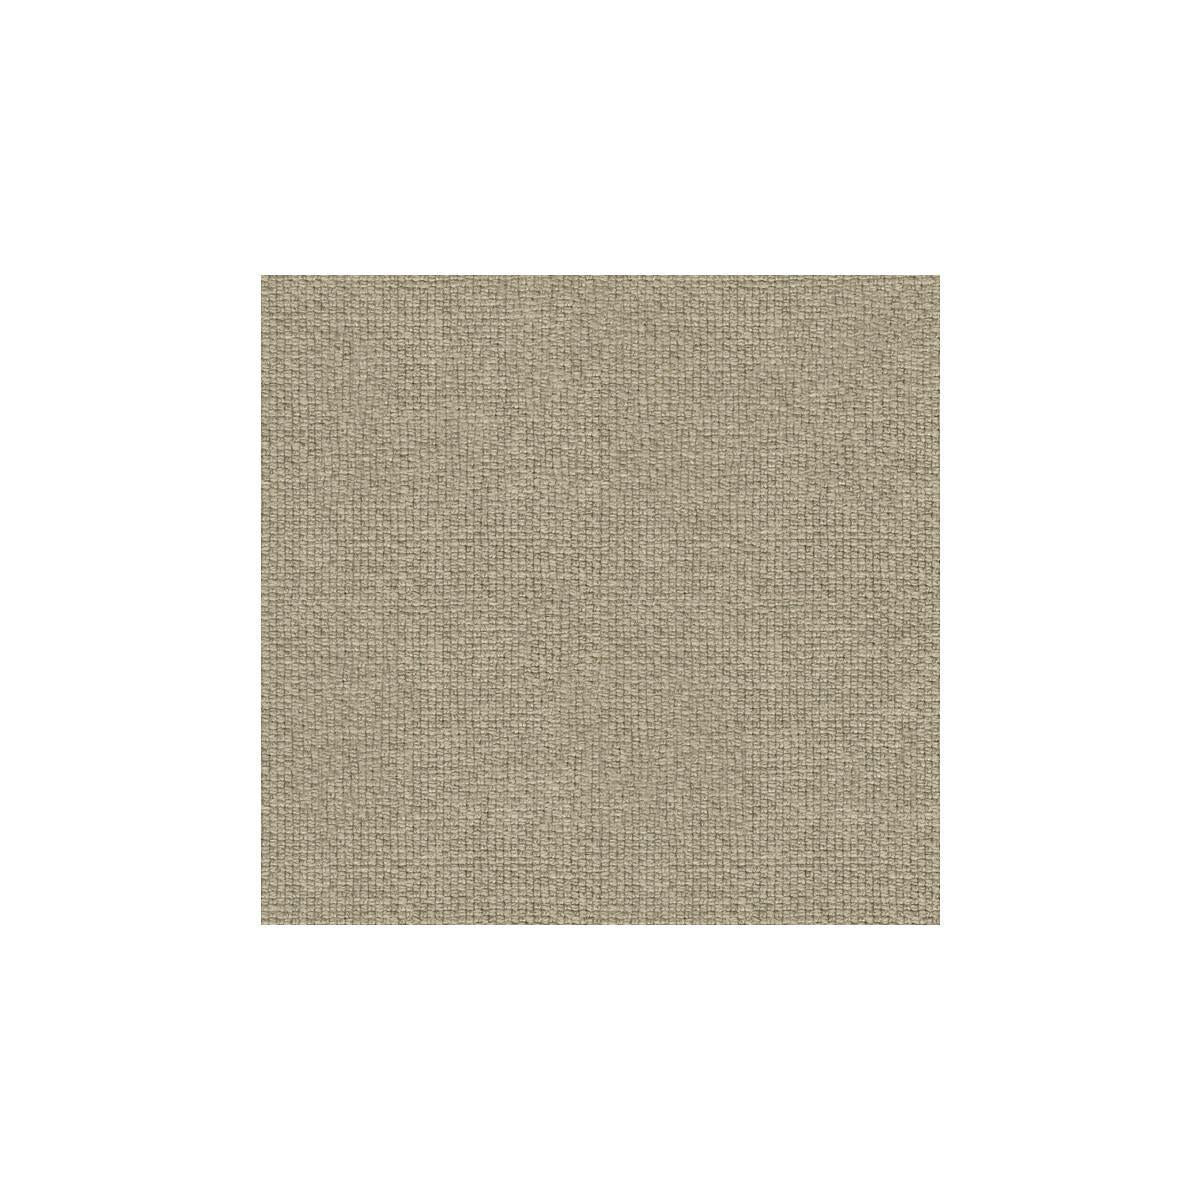 Lee Jofa Vendome Linen Natural Upholstery Fabric – DecoratorsBest